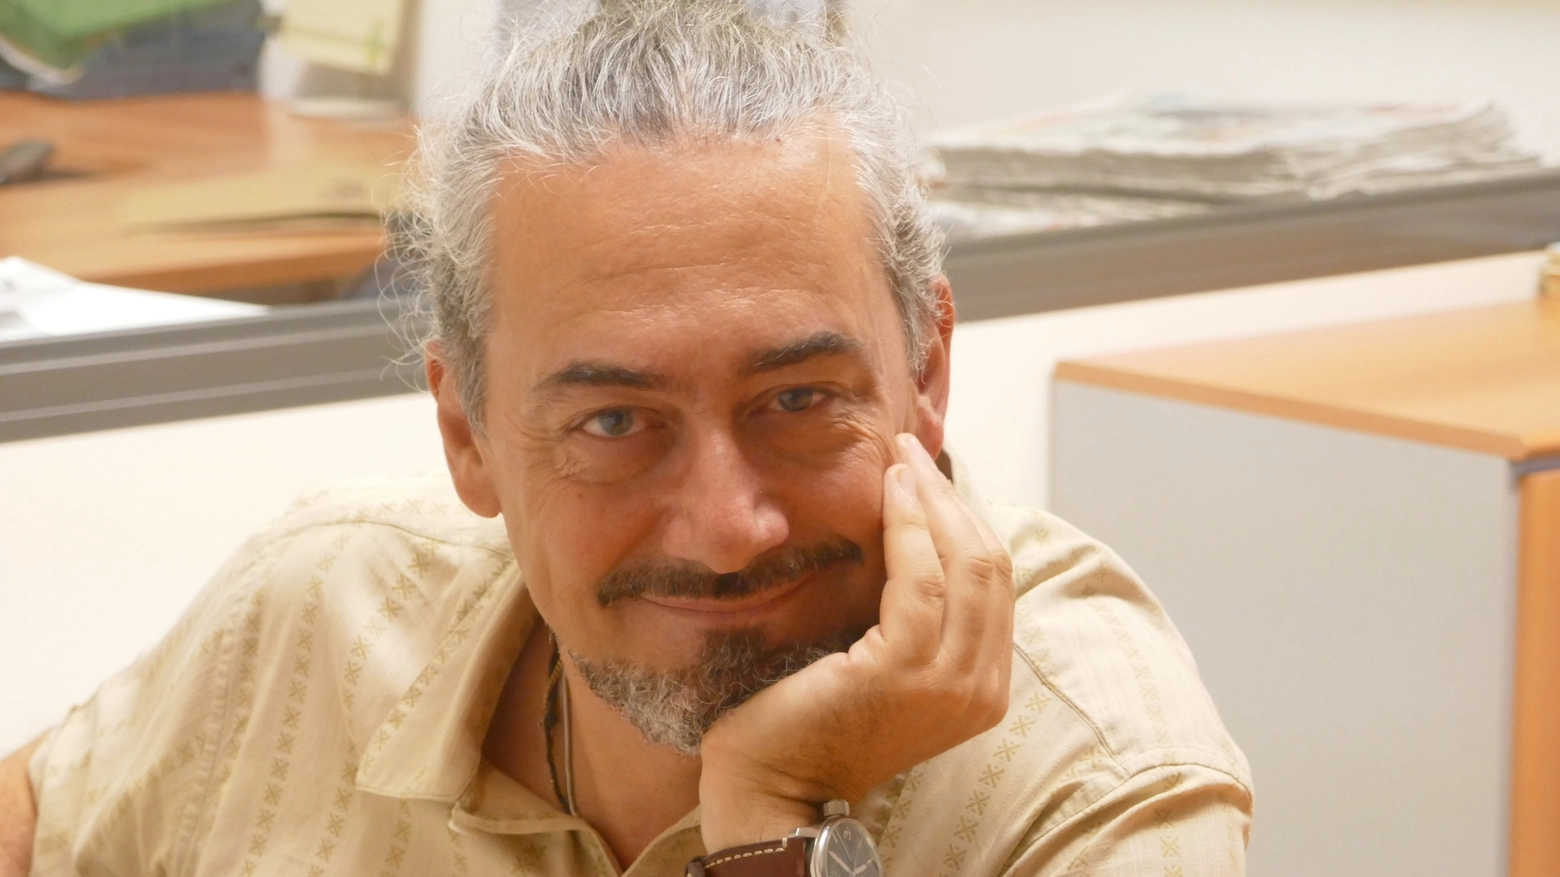 Gian Paolo Panzica